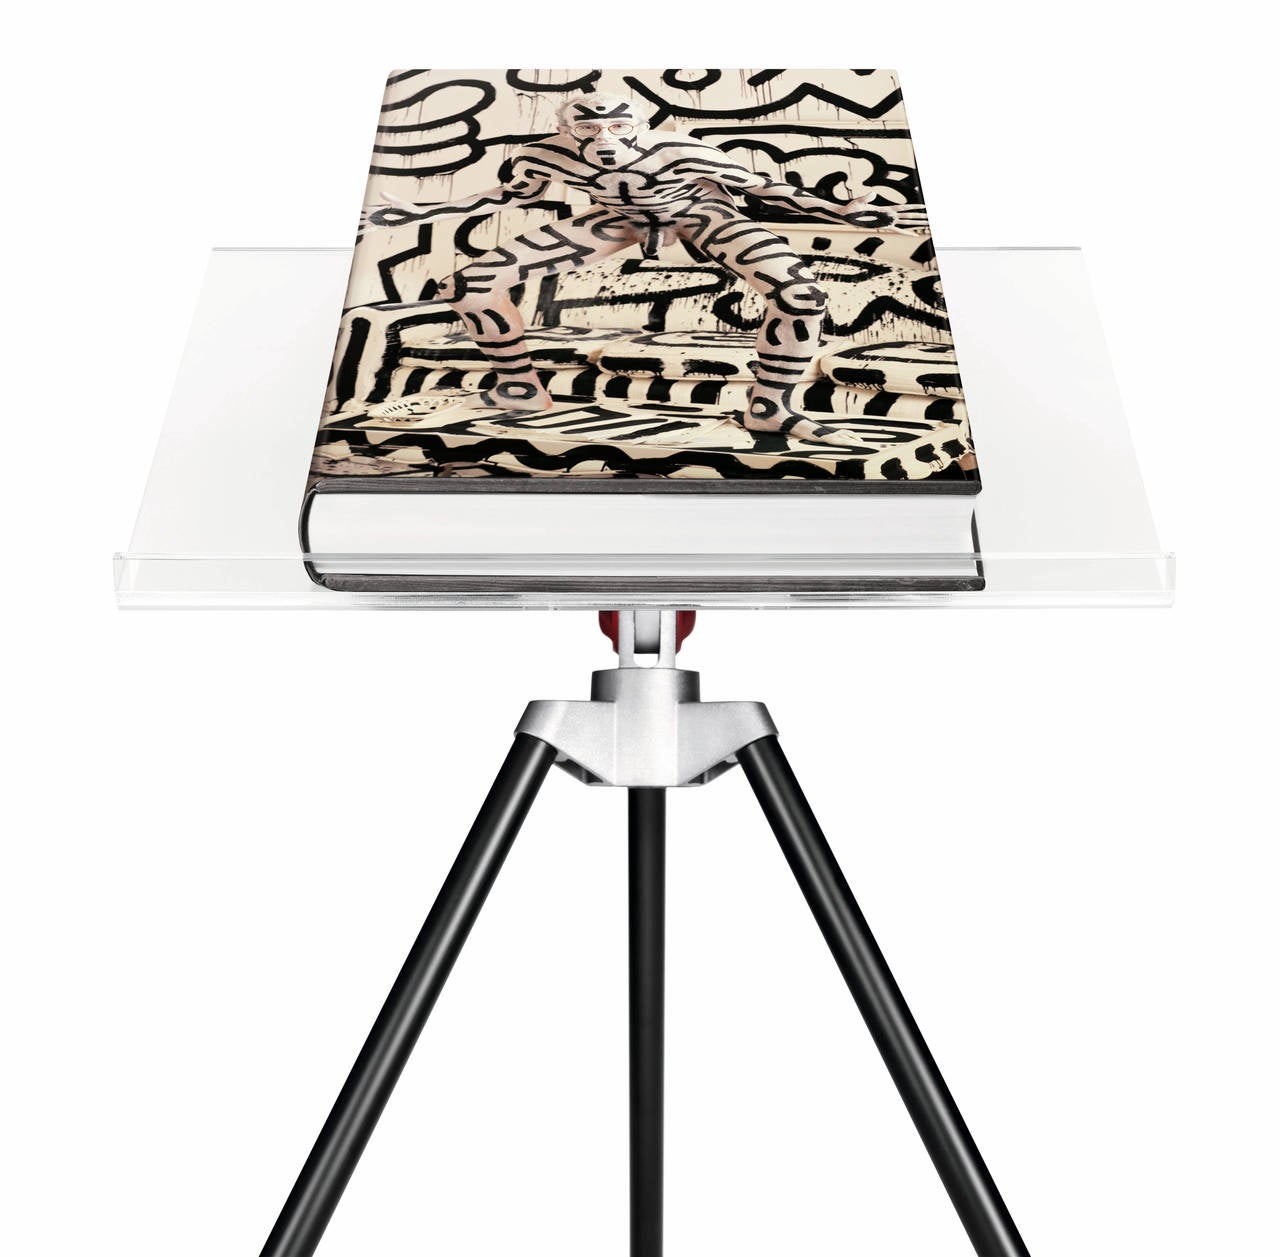 Annie Leibovitz, Art Ed, SUMO book, Marc Newson stand, Black & White photography For Sale 1